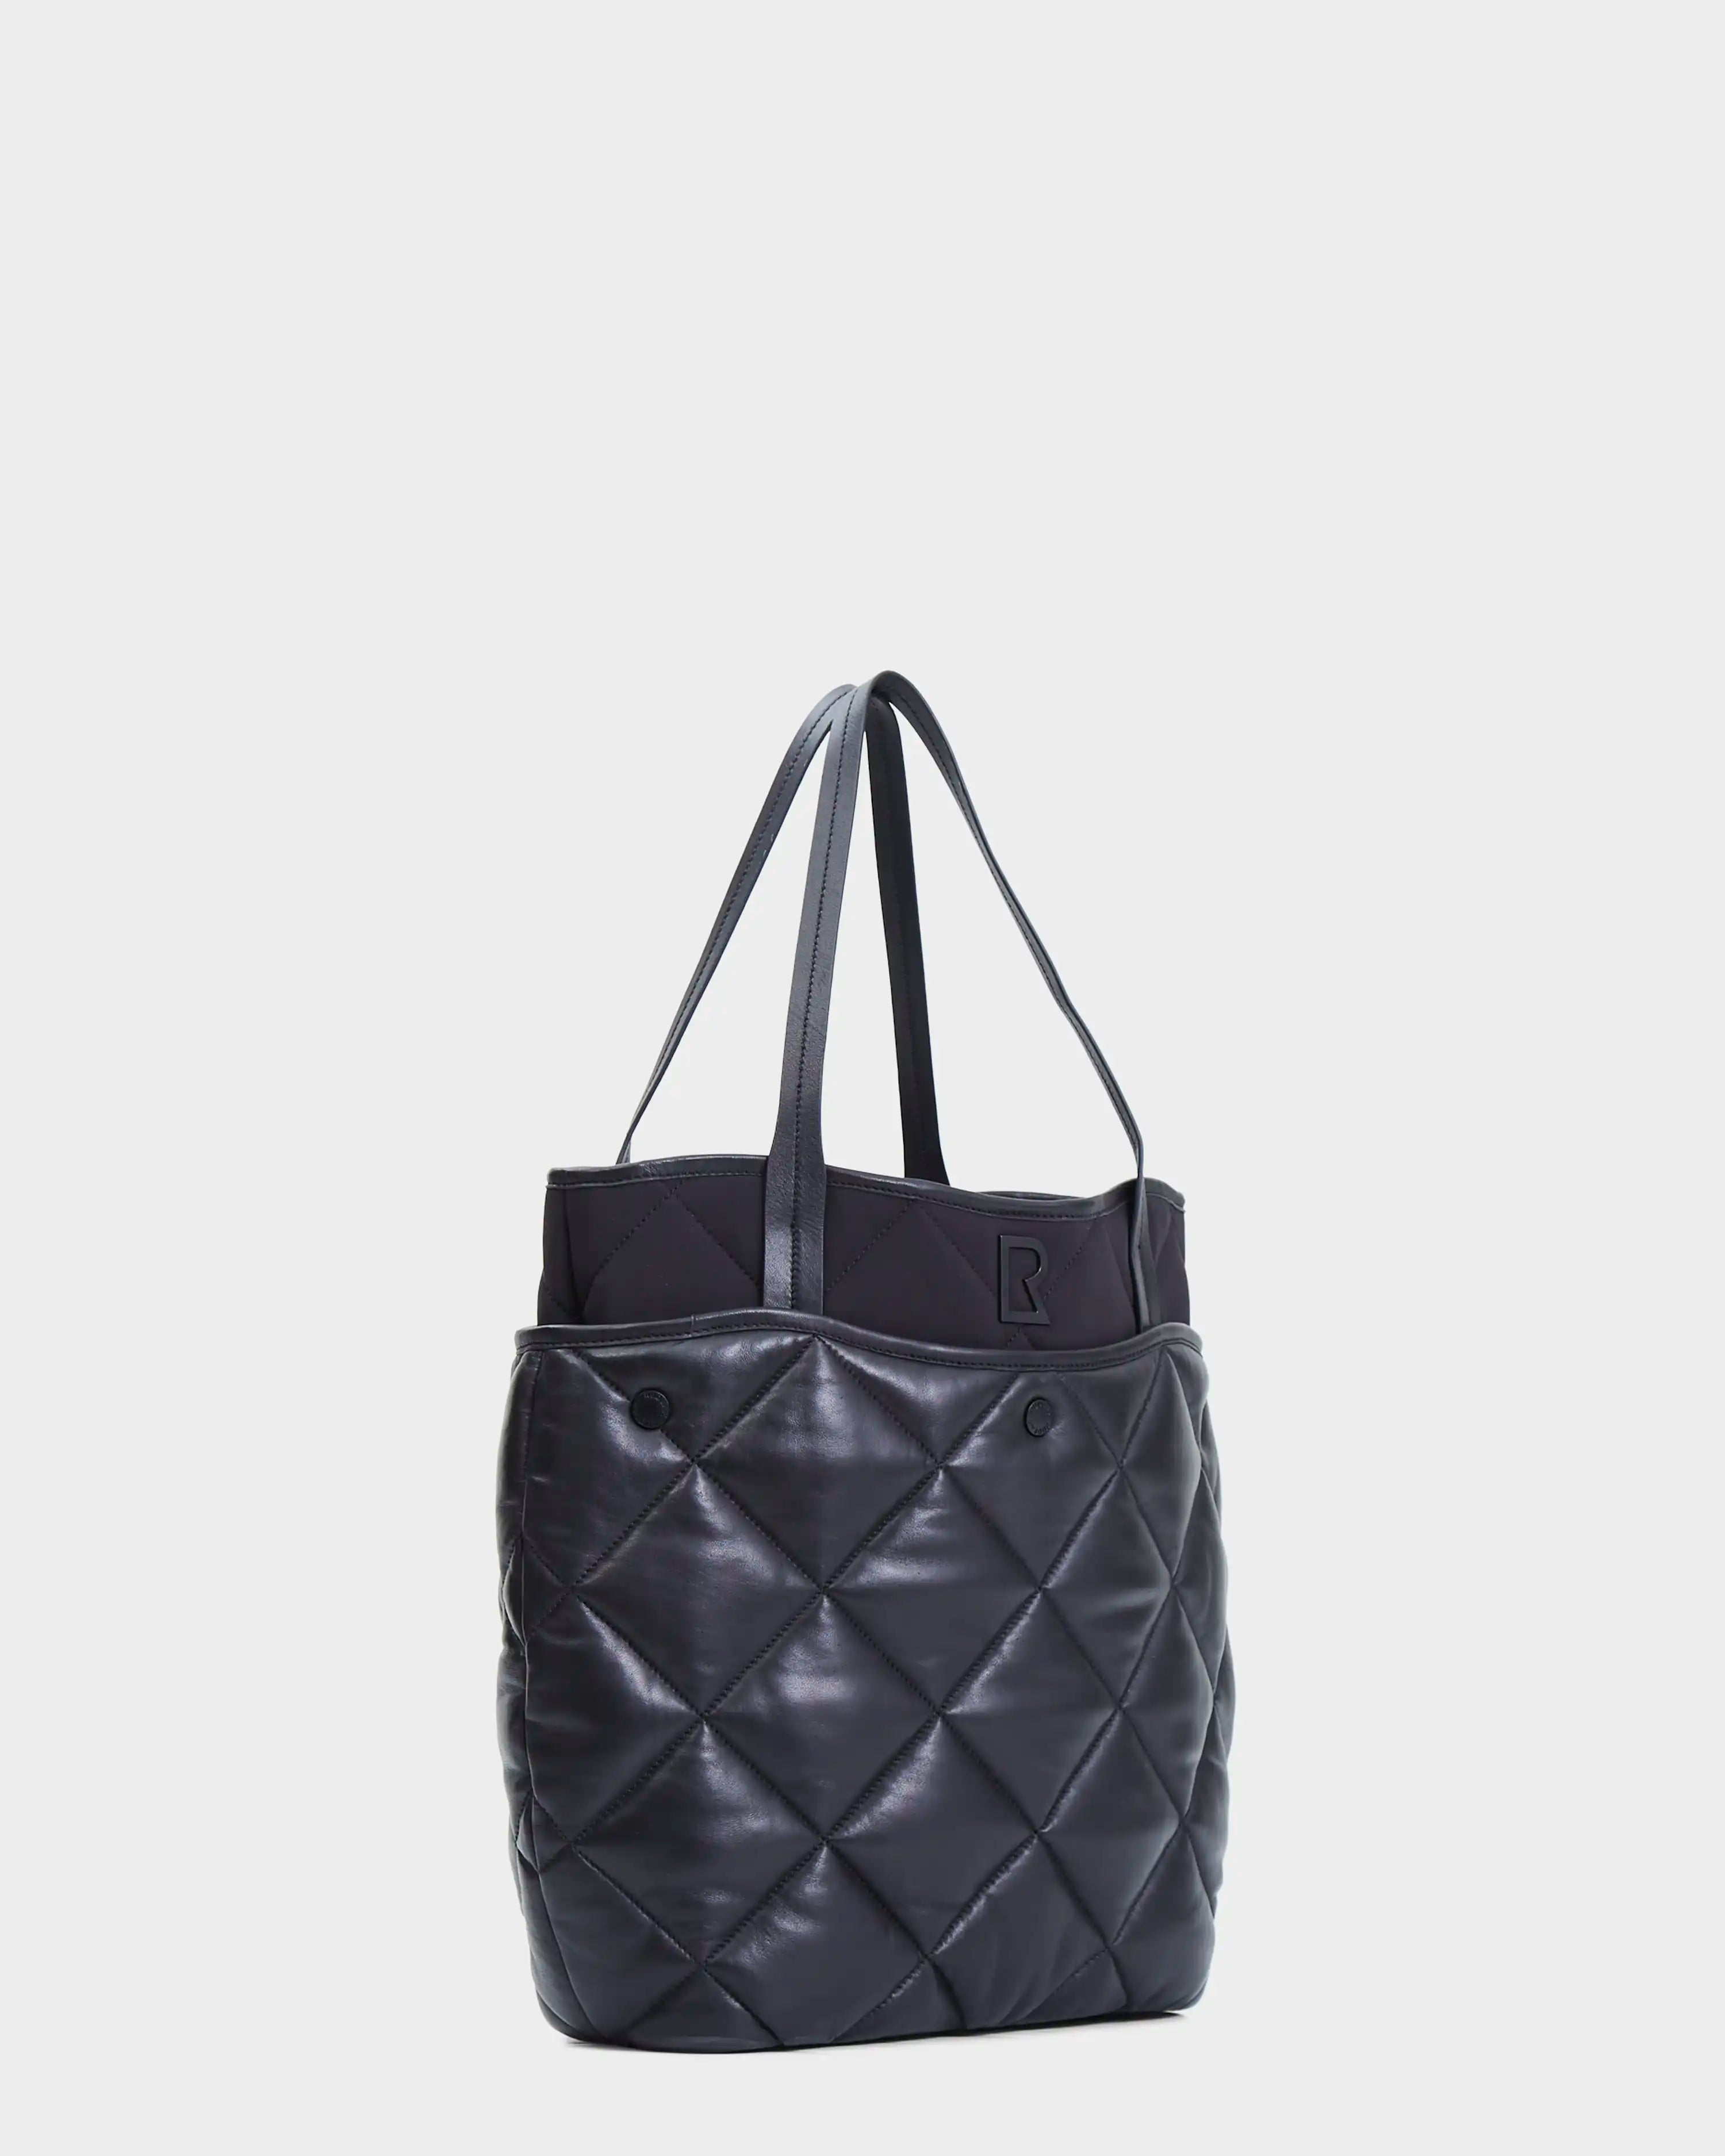 Lululemon Shopping Tote Bag, Made of Non Woven Polypropylene - China  Lululemon Tote Bag and Lululemon Shopping Tote Bag price